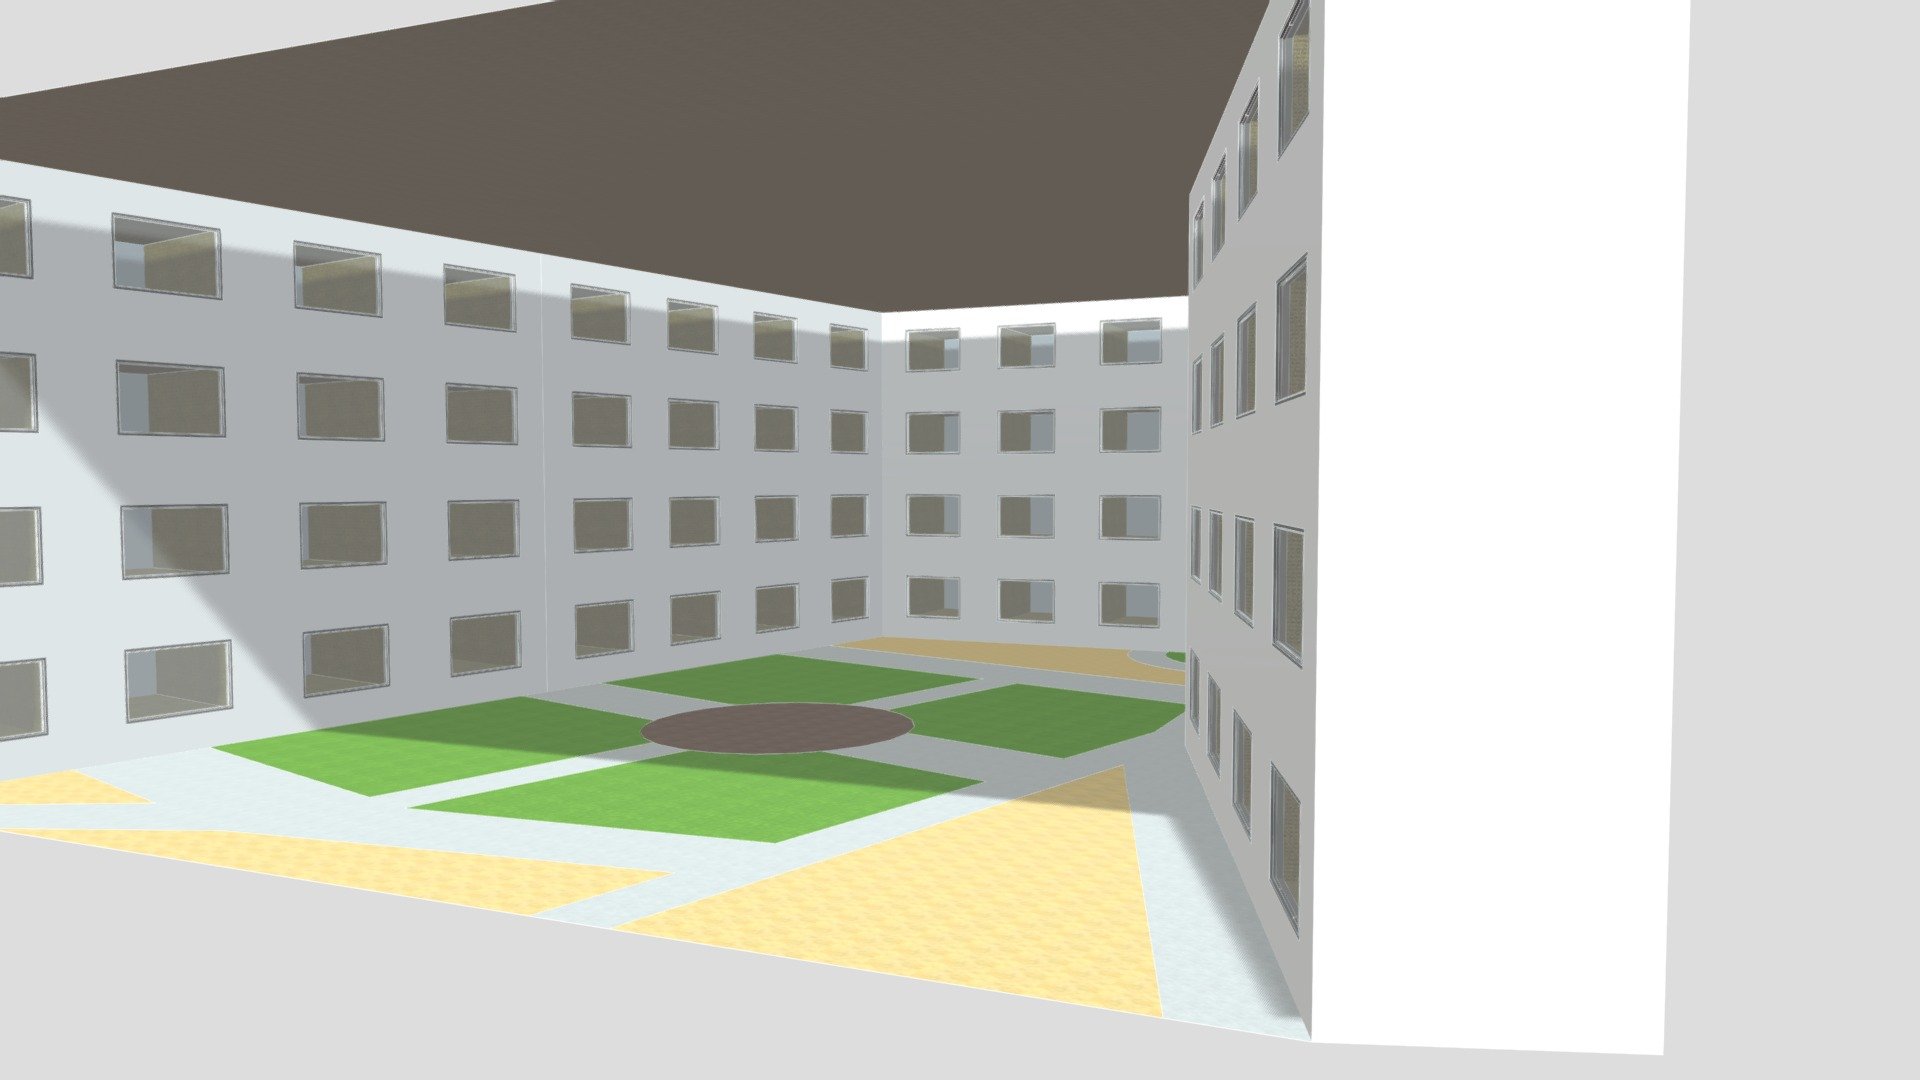 Backrooms Level 188 - 3D model by sethyann68 (@sethyann68) [575a723]